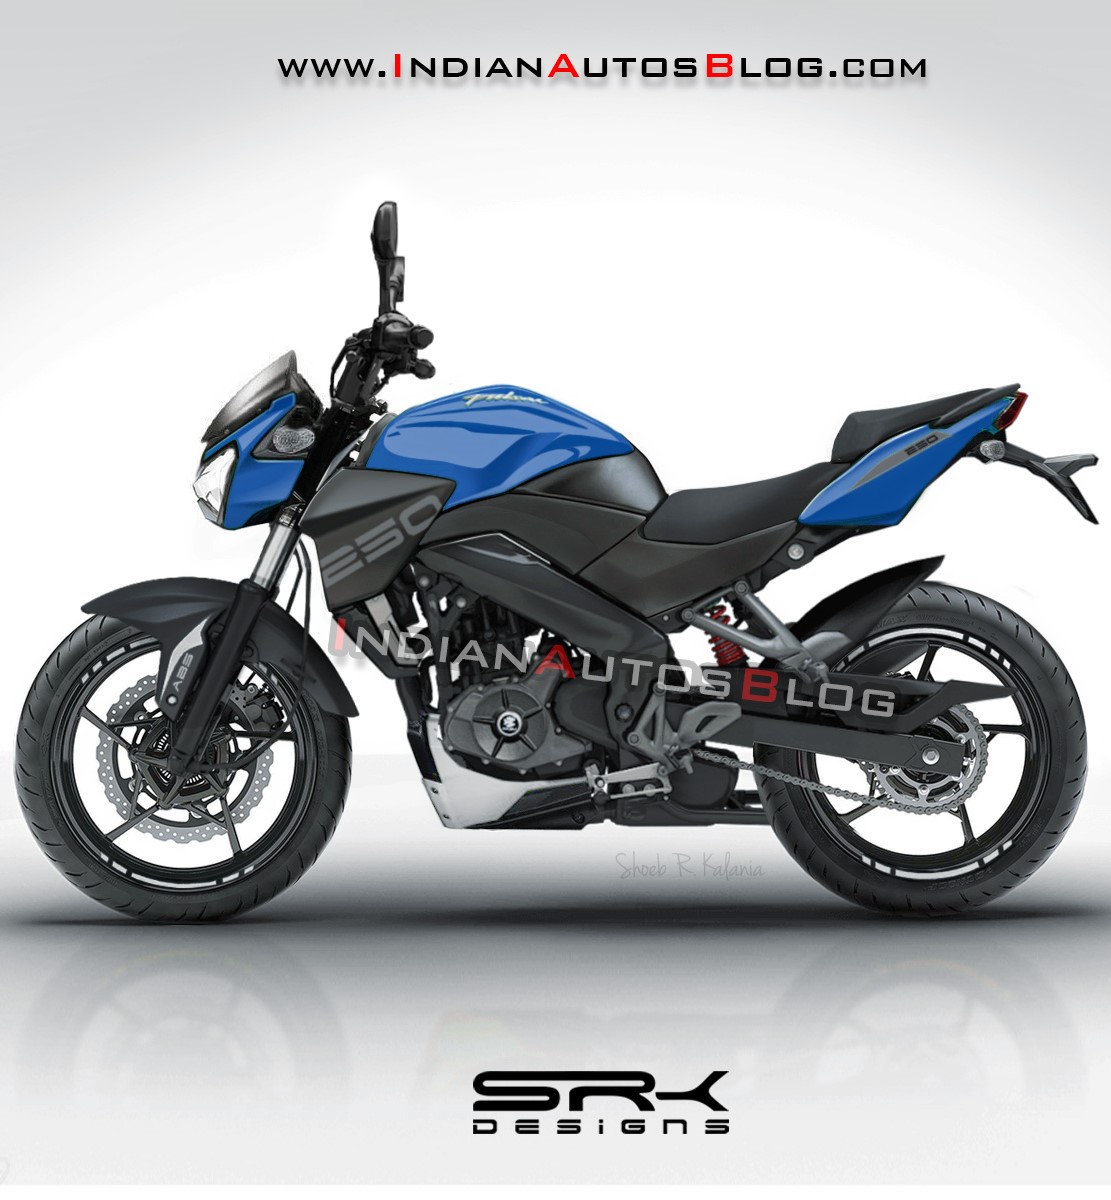 Bajaj Pulsar Ns250 Expected To Launch In 2020 In India Bikesrepublic